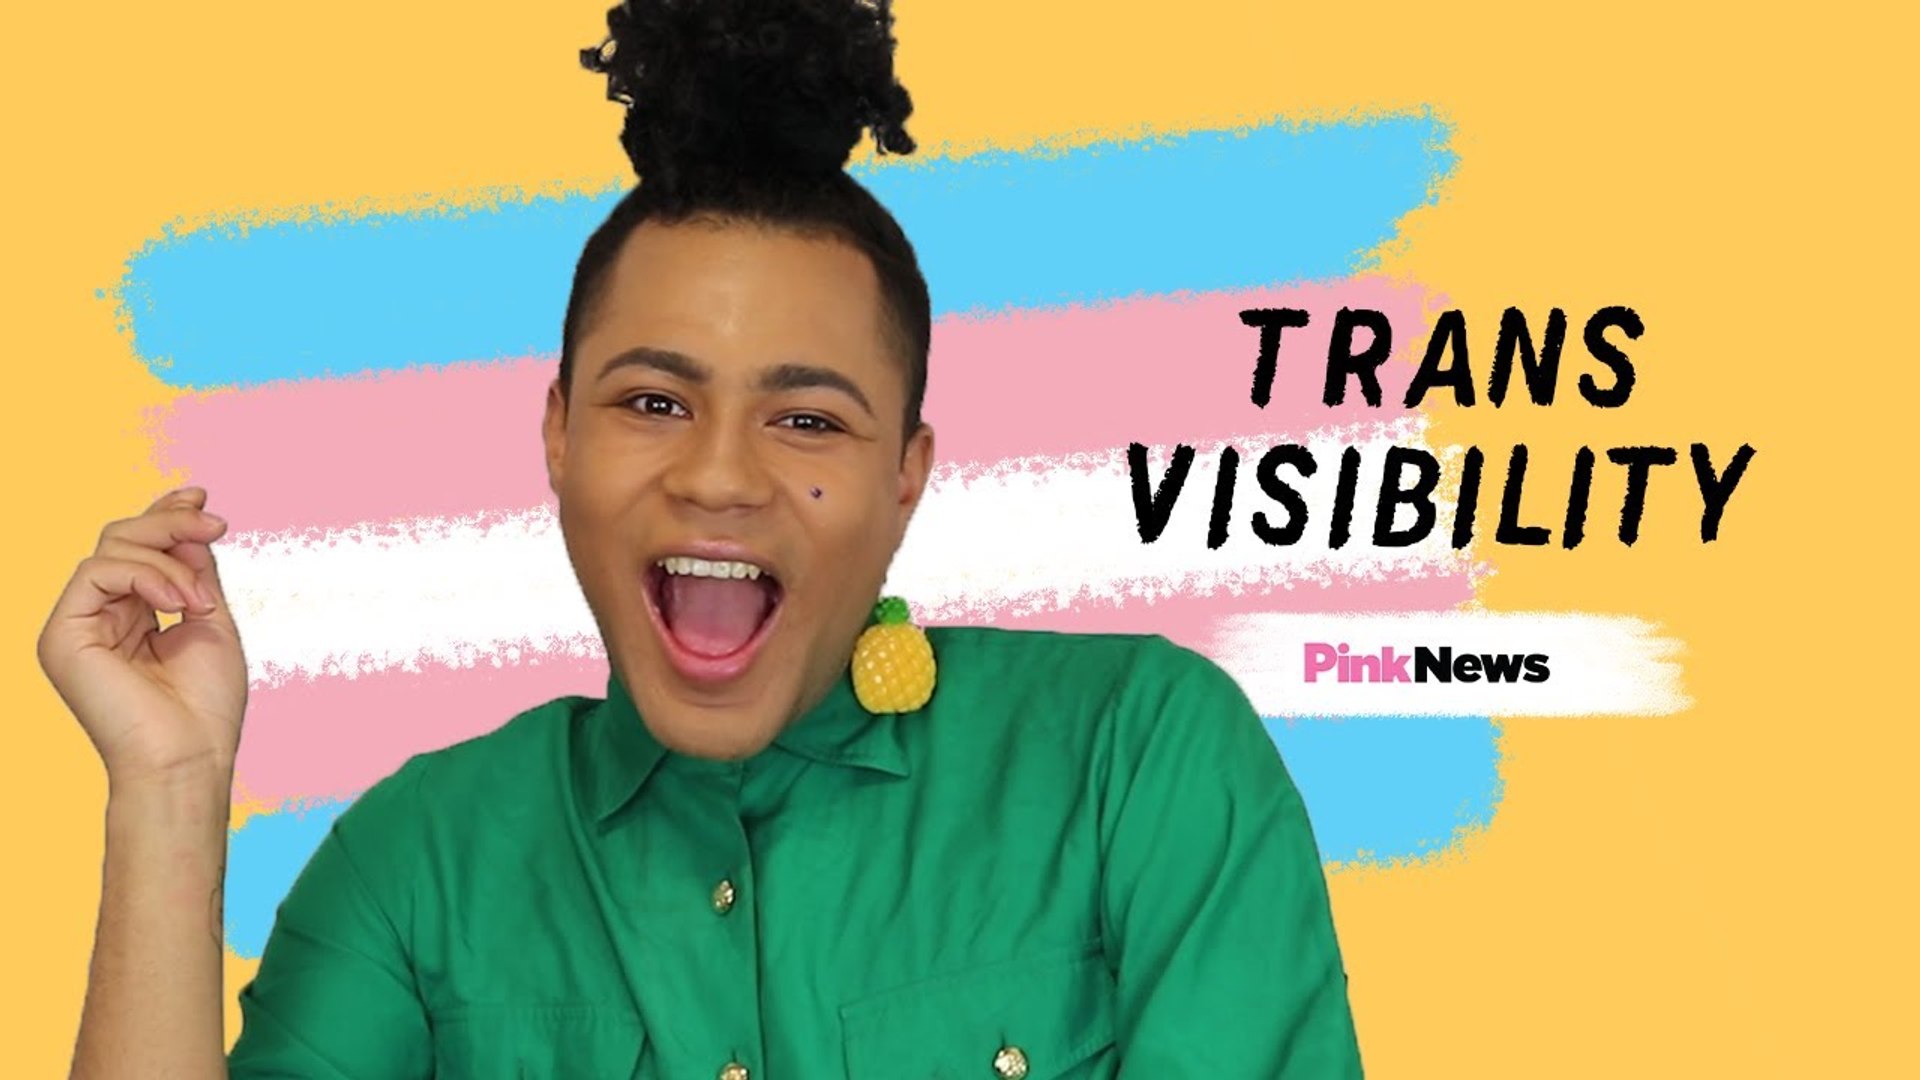 Transgender activist Travis Alabanza on transphobia